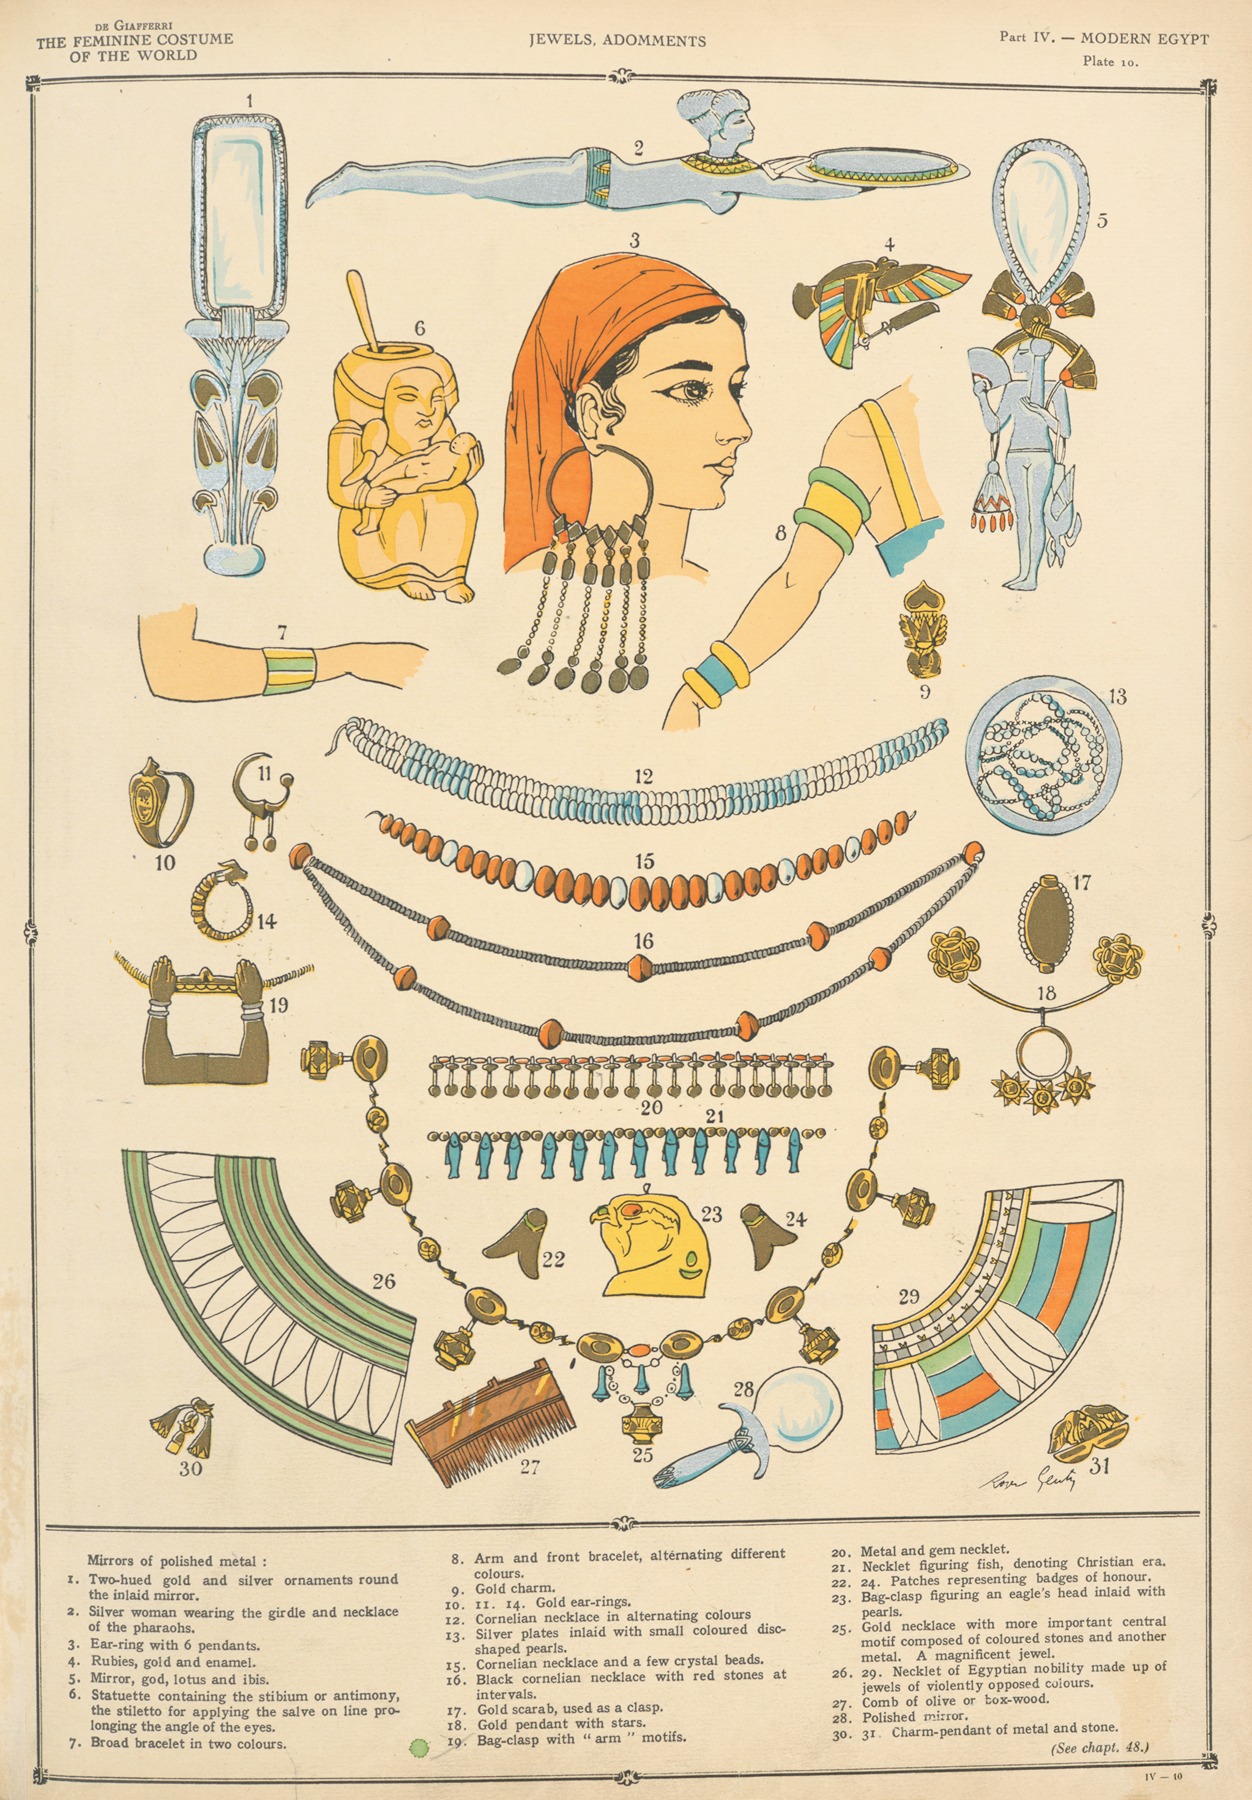 Paul Louis de Giafferri - Modern Egypt – Jewels, adomments